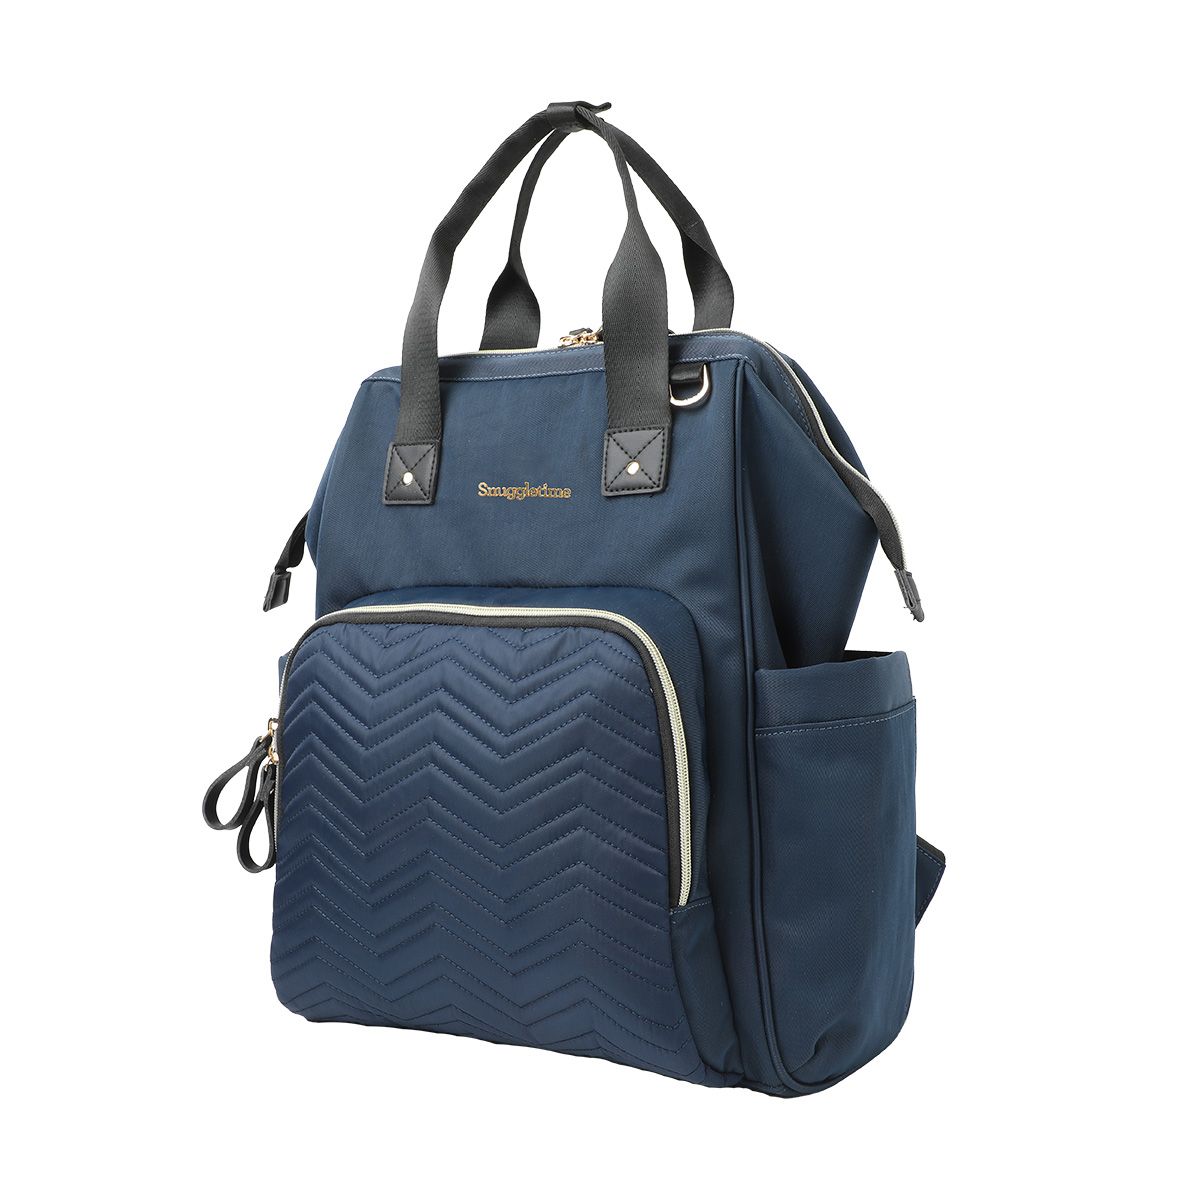 Snuggletime Camdeboo Backpack - Blue | Shop Today. Get it Tomorrow ...